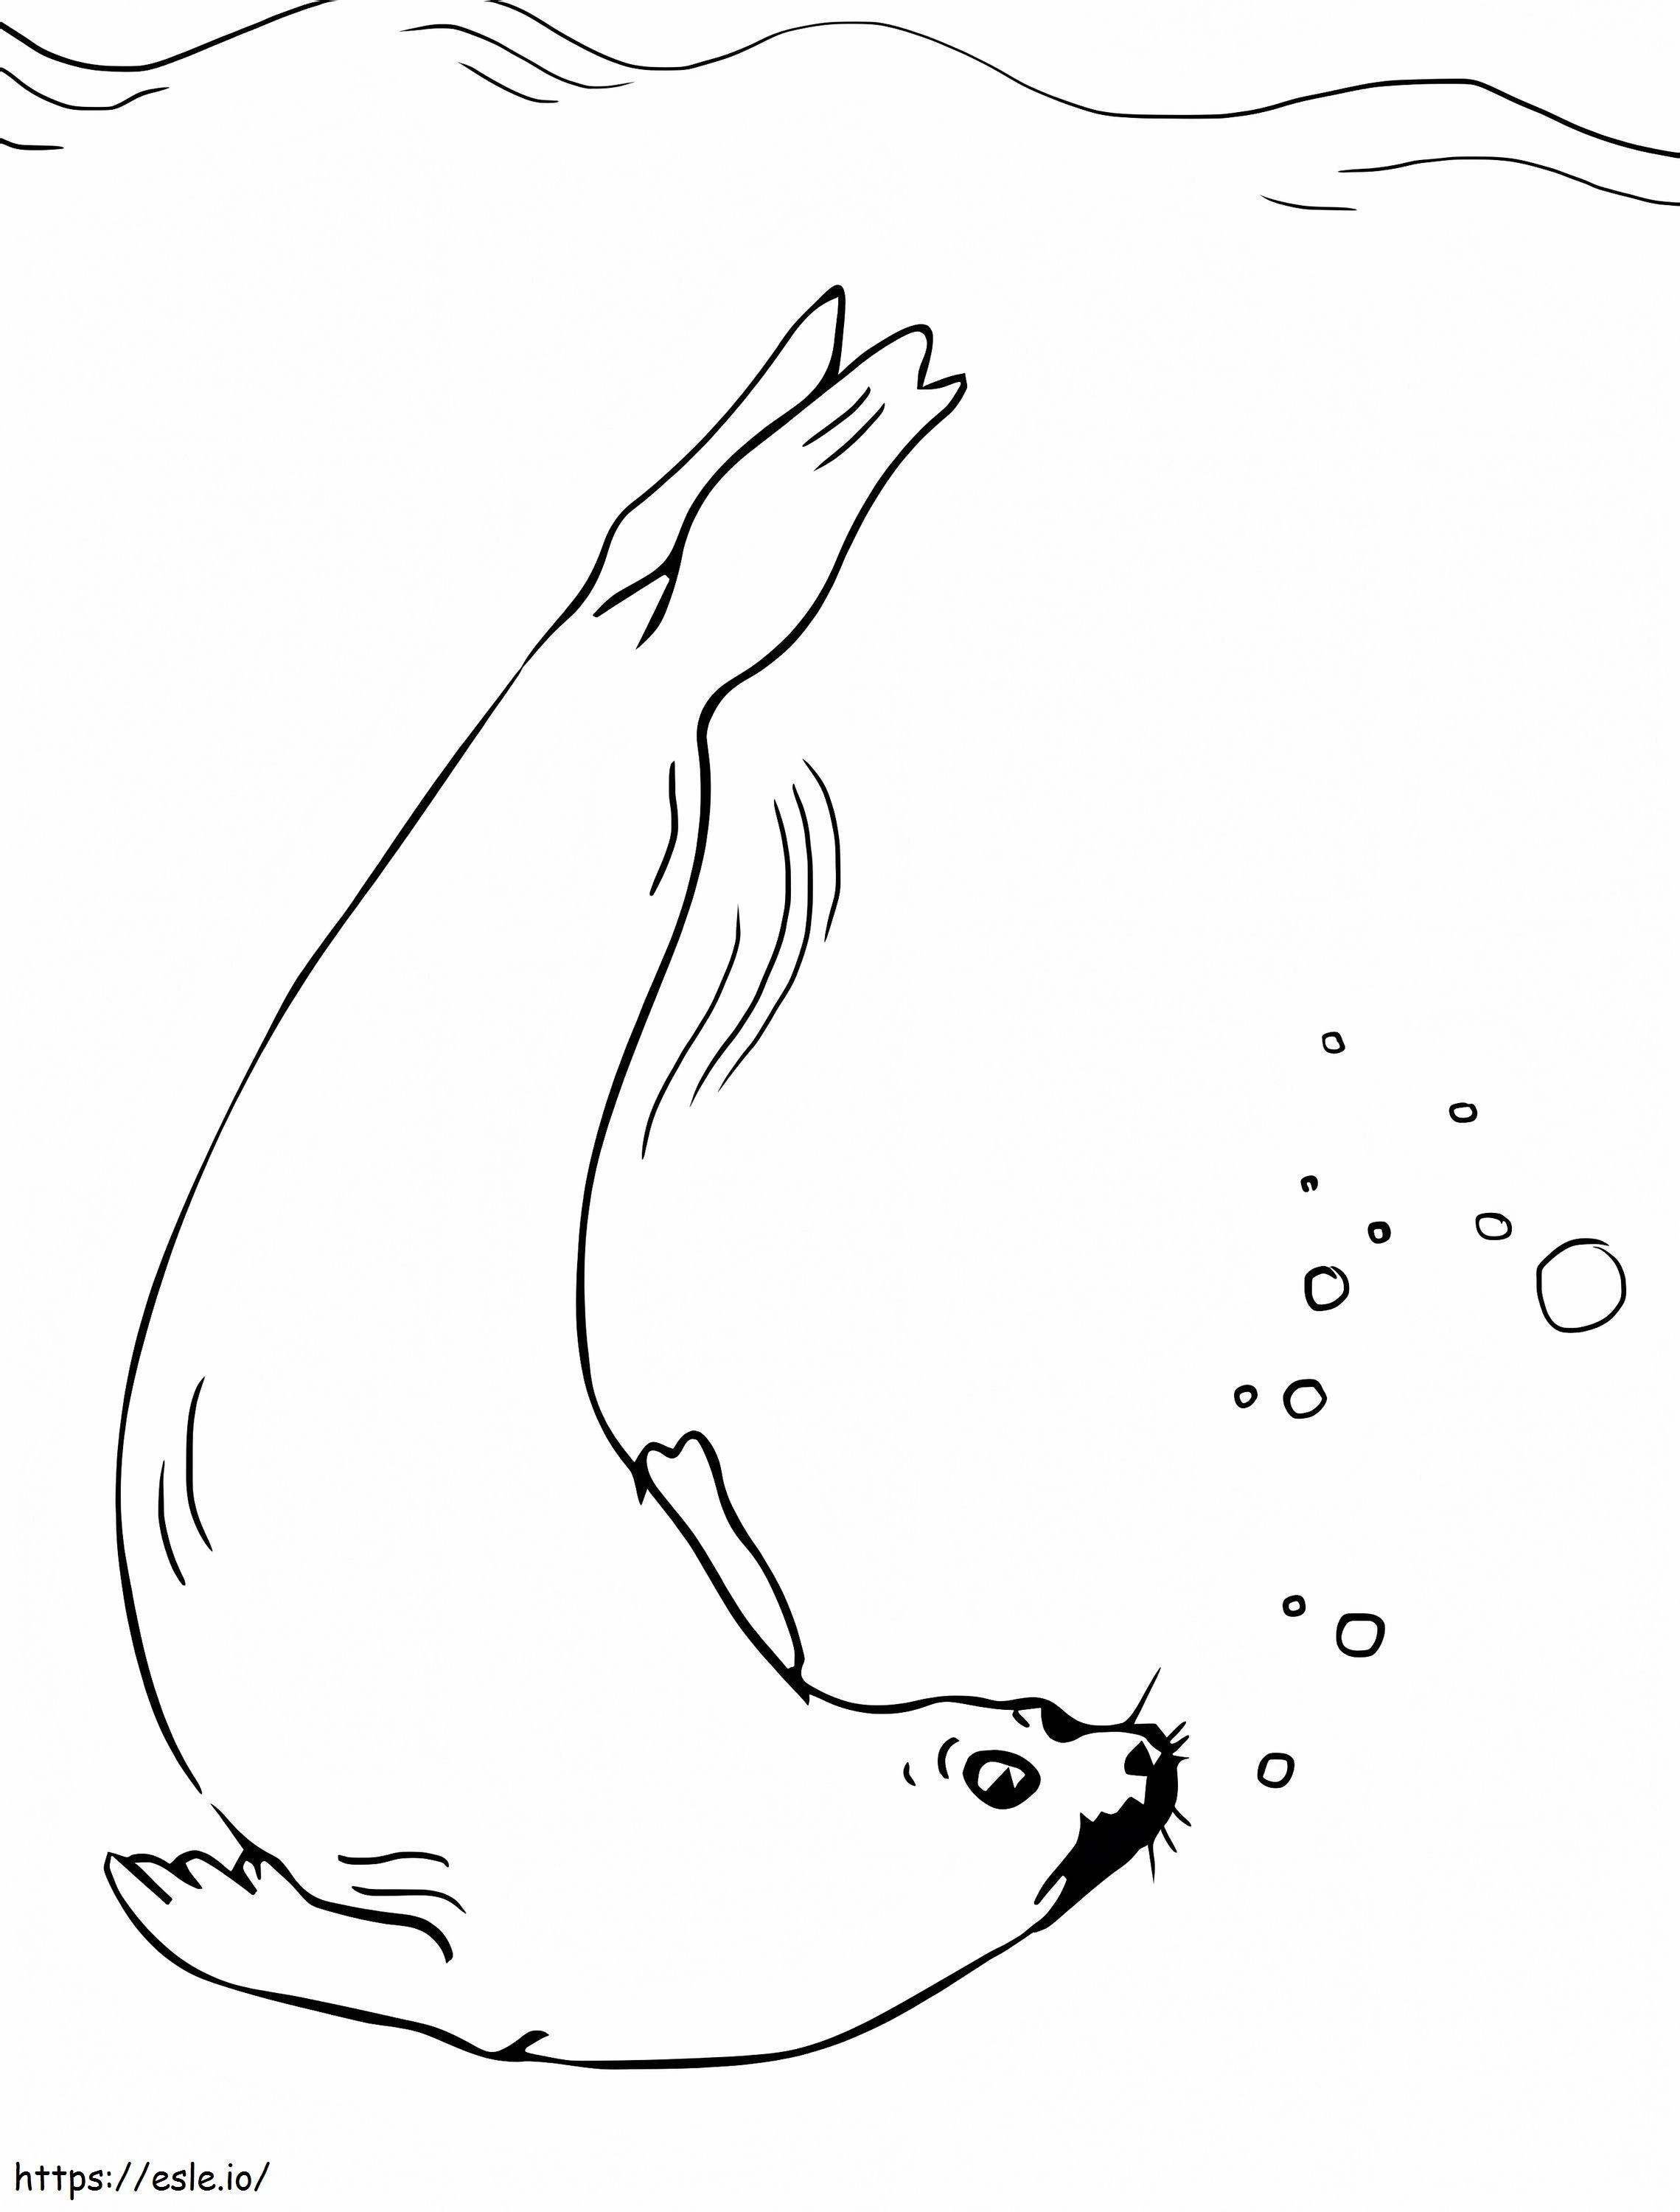 Fur Seal coloring page